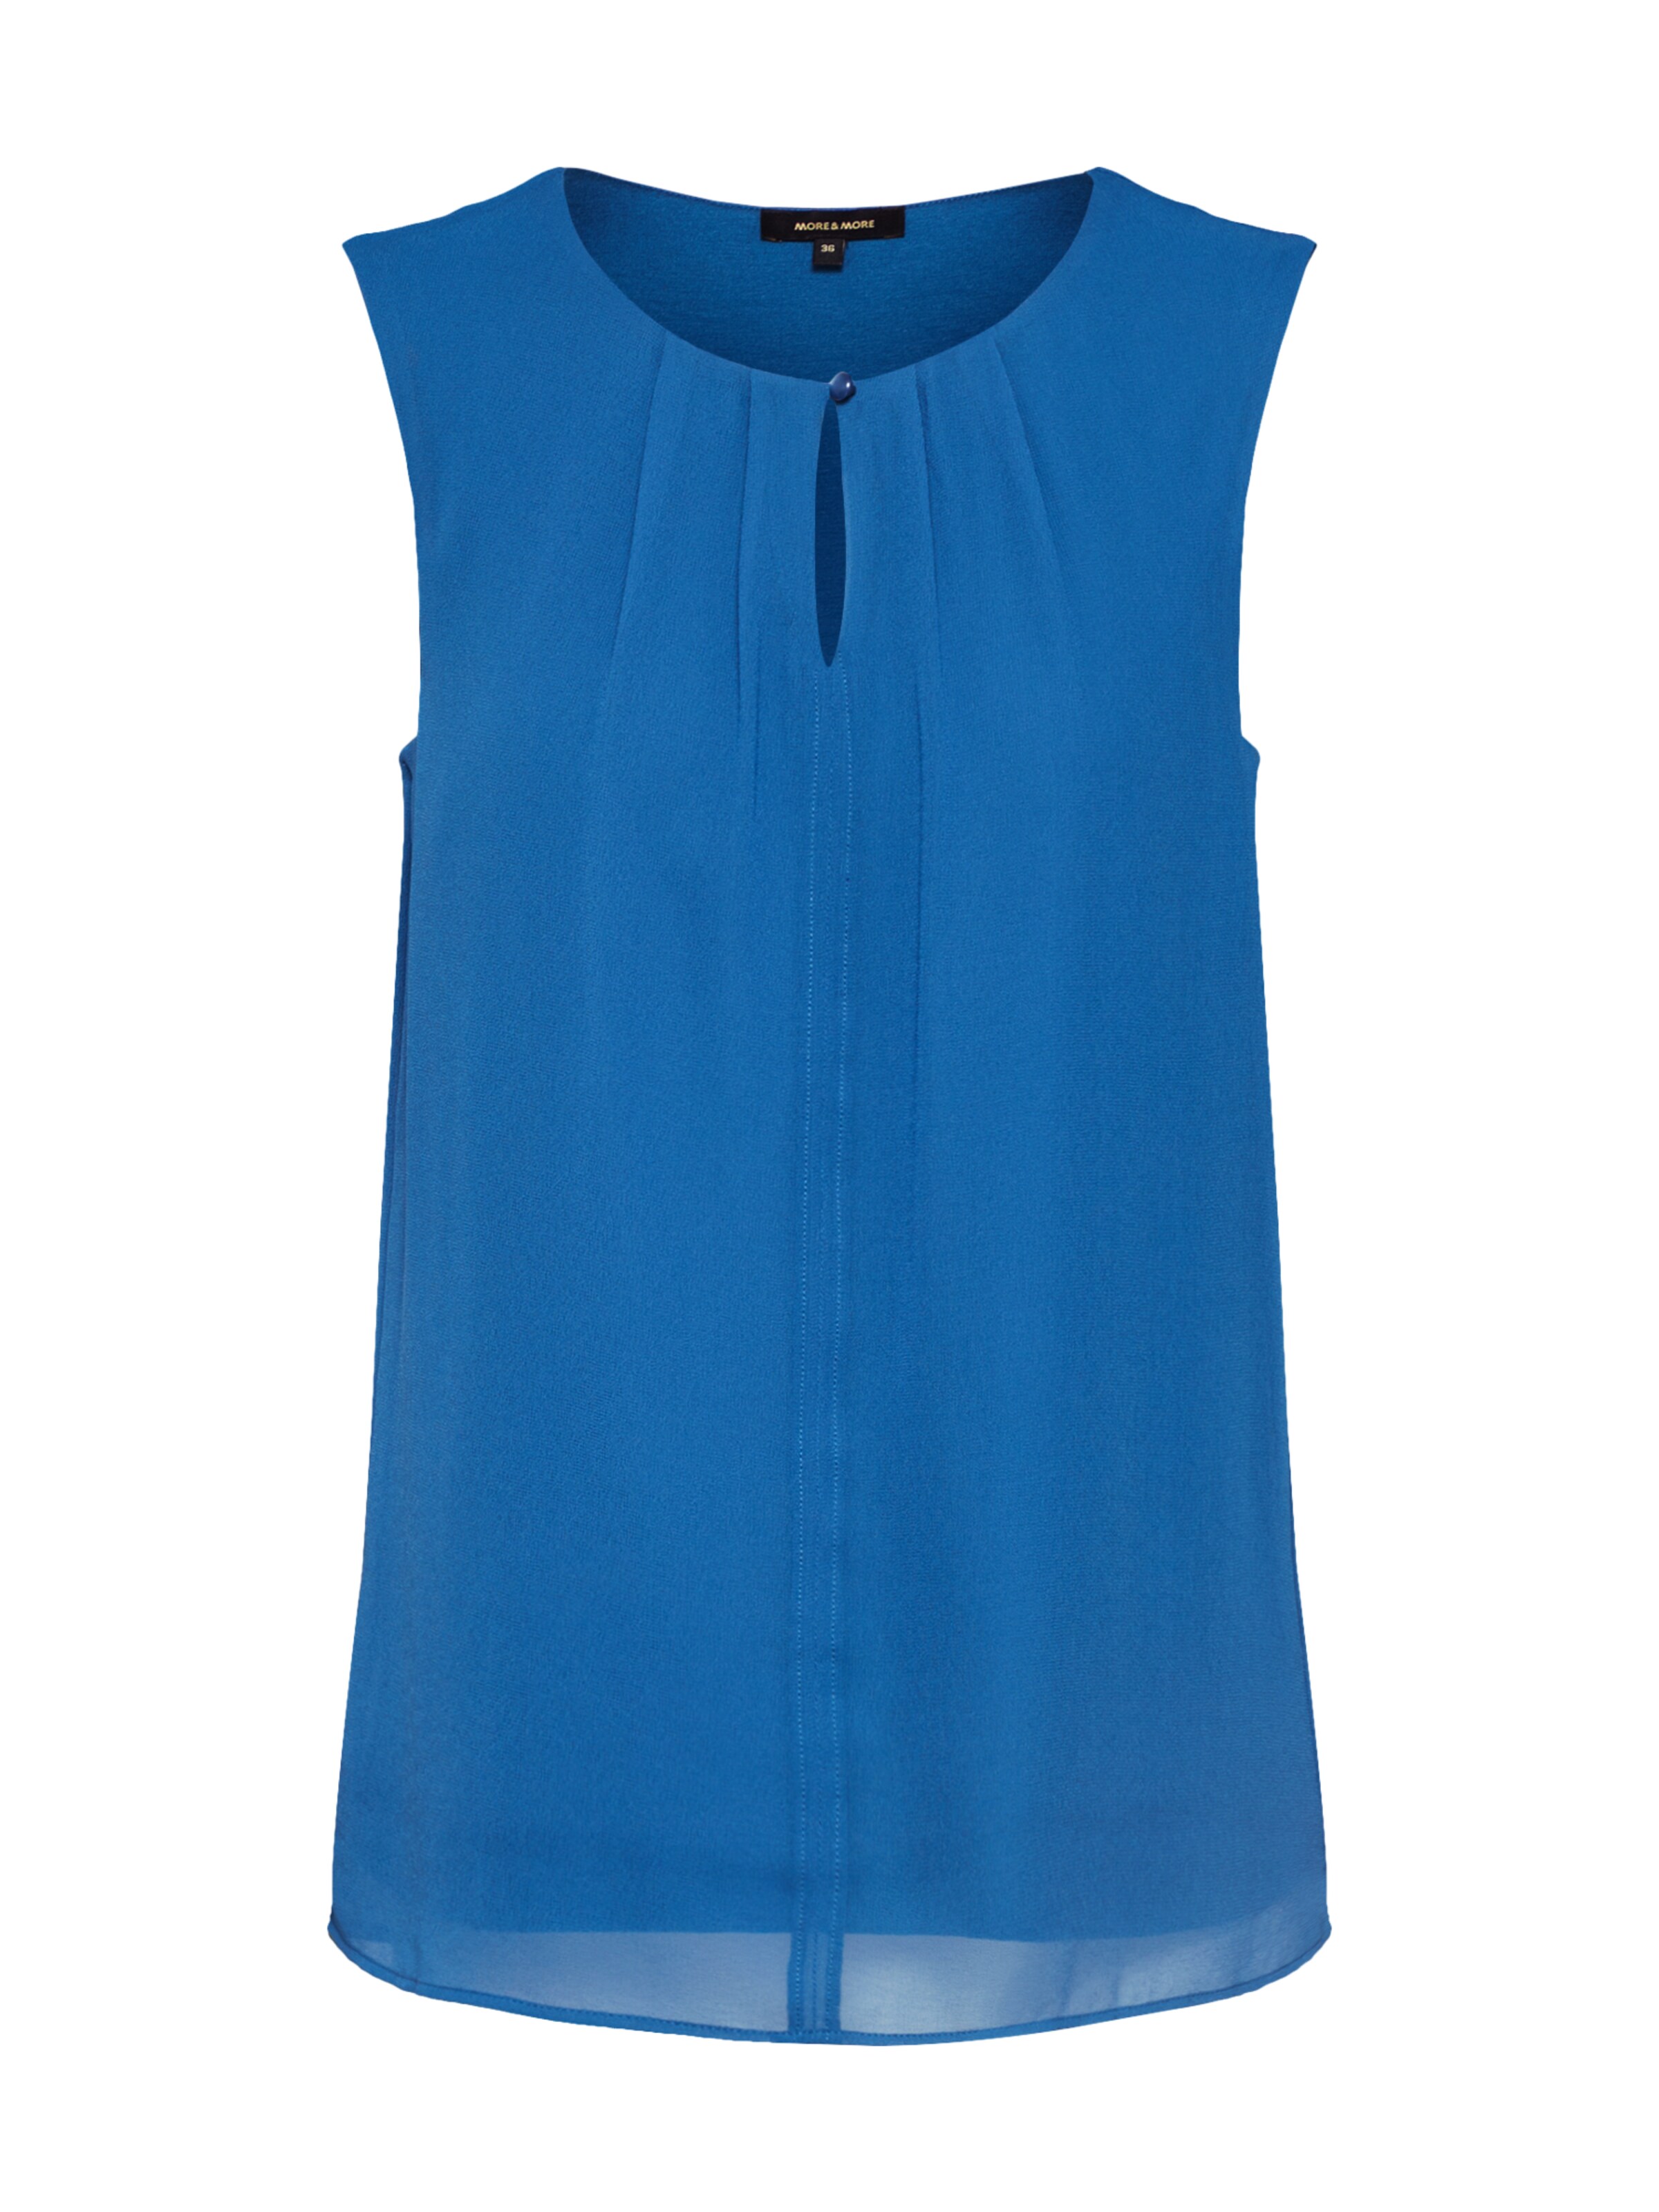 De blauwe blouse van Marieke Elsinga bij RTL Boulevard - Style Like